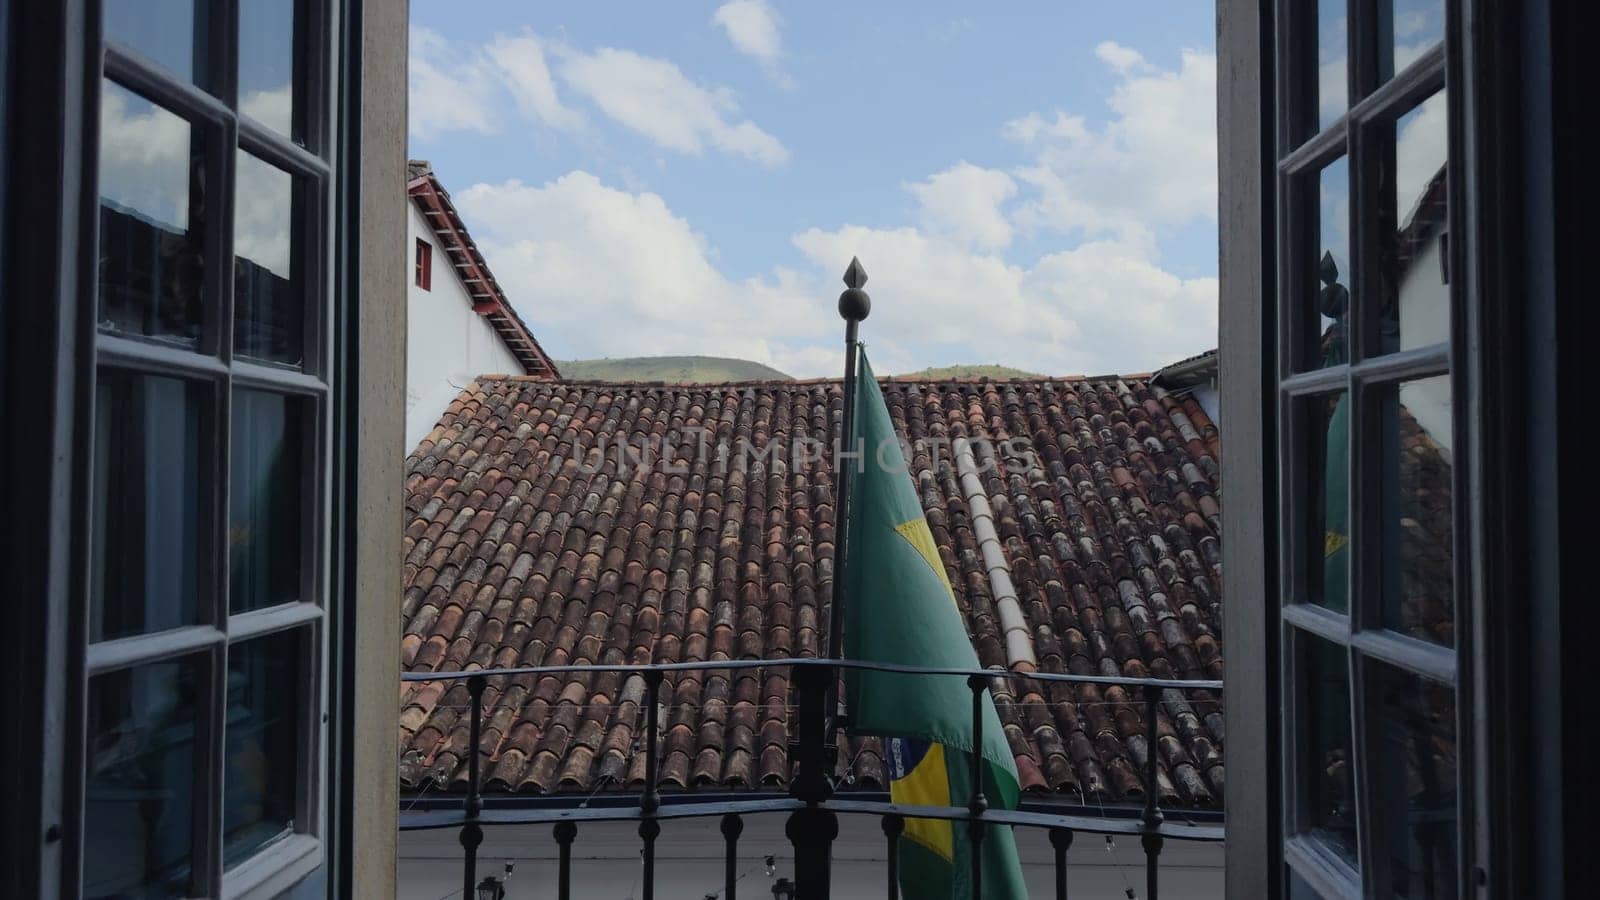 Brazilian Flag Waving on an Open Balcony Overlooking City Rooftops by FerradalFCG